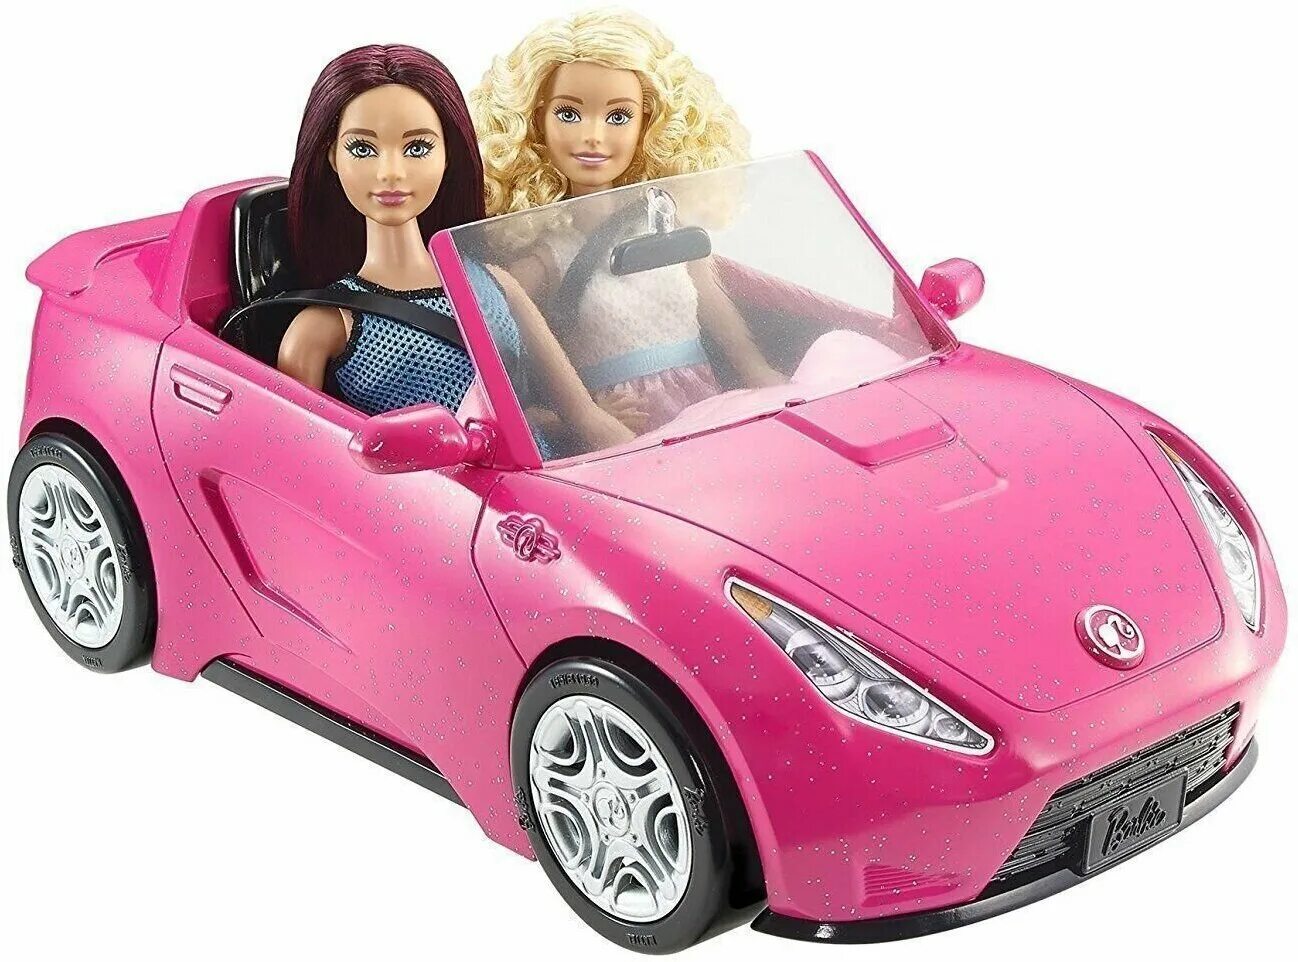 Набор Barbie гламурный кабриолет, djr55. Кабриолет Барби Нордпласт. Барби машина кабриолет 90е. Кукла Барби с машиной.